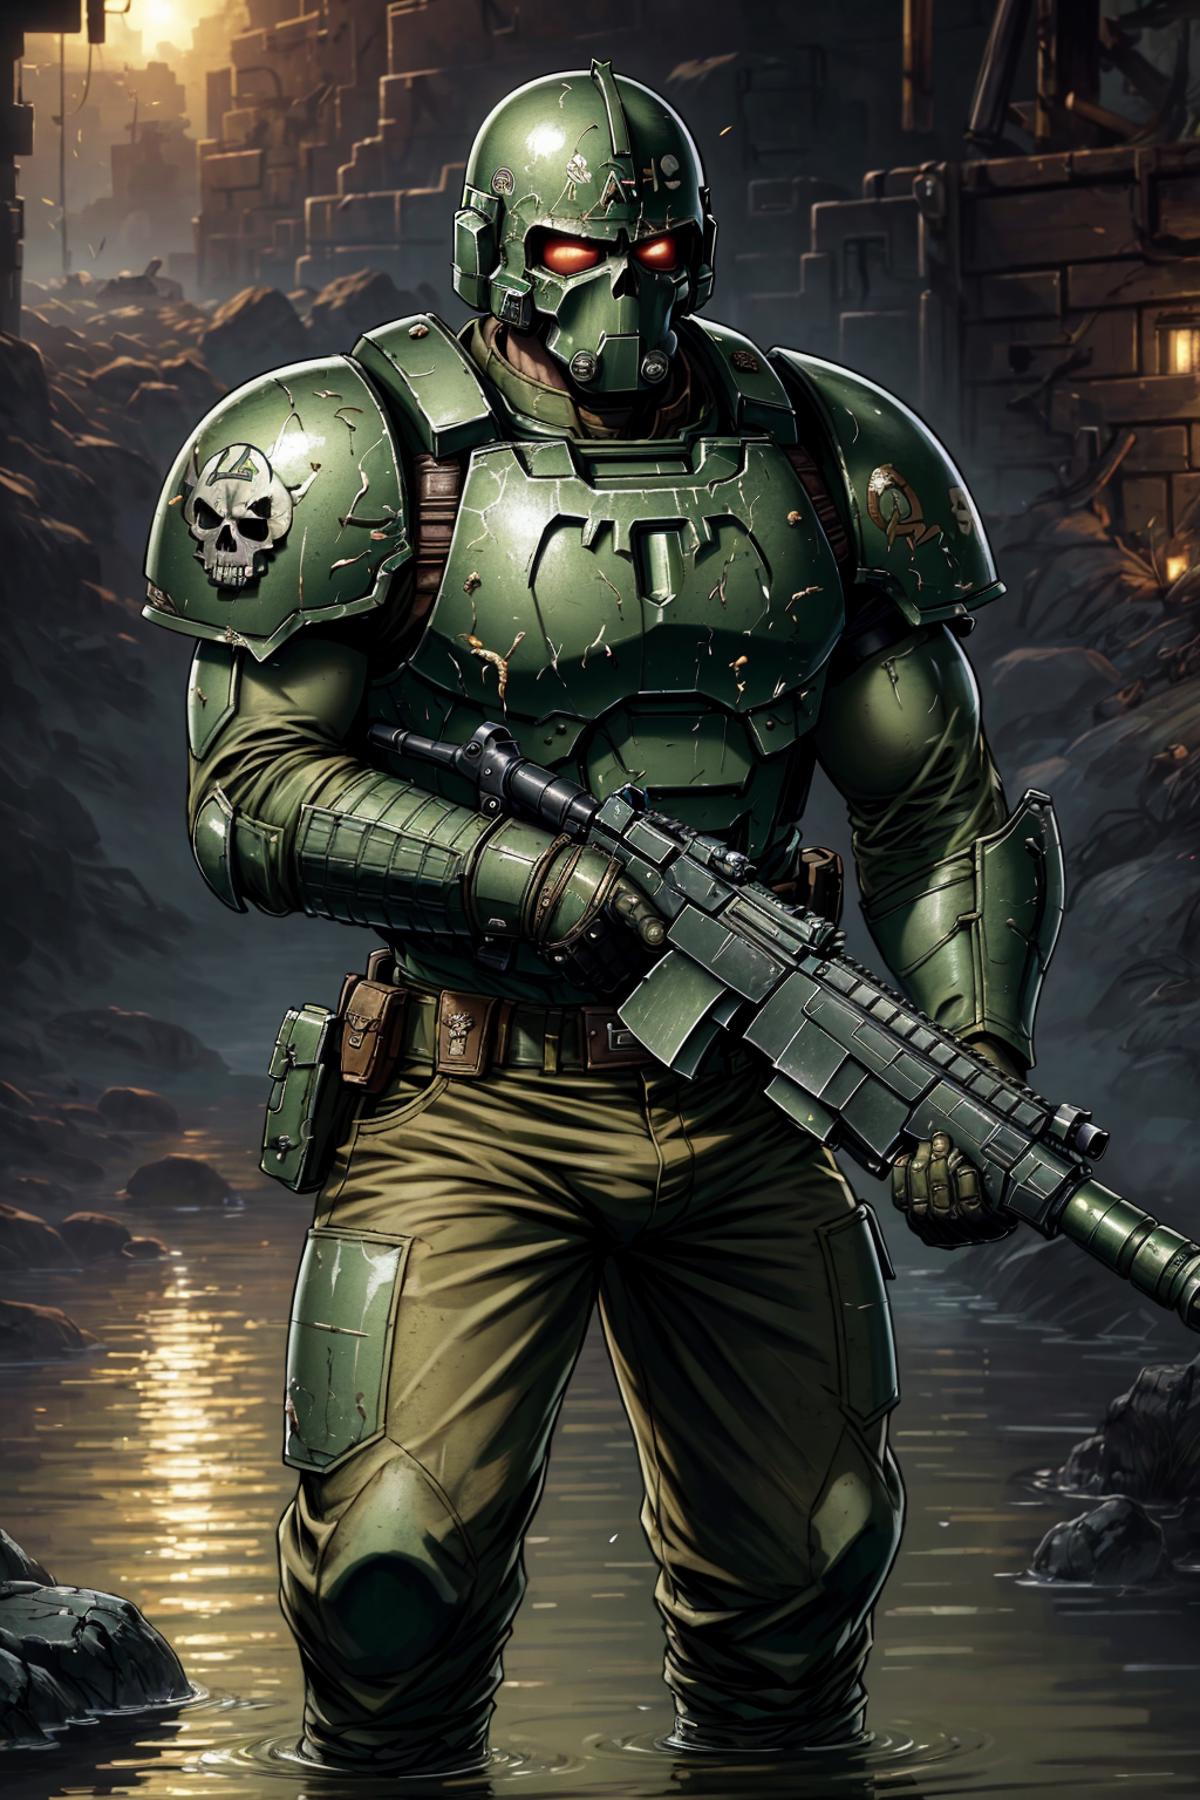 Warhammer 40k Imperial Guardsman image by Flintmongoose